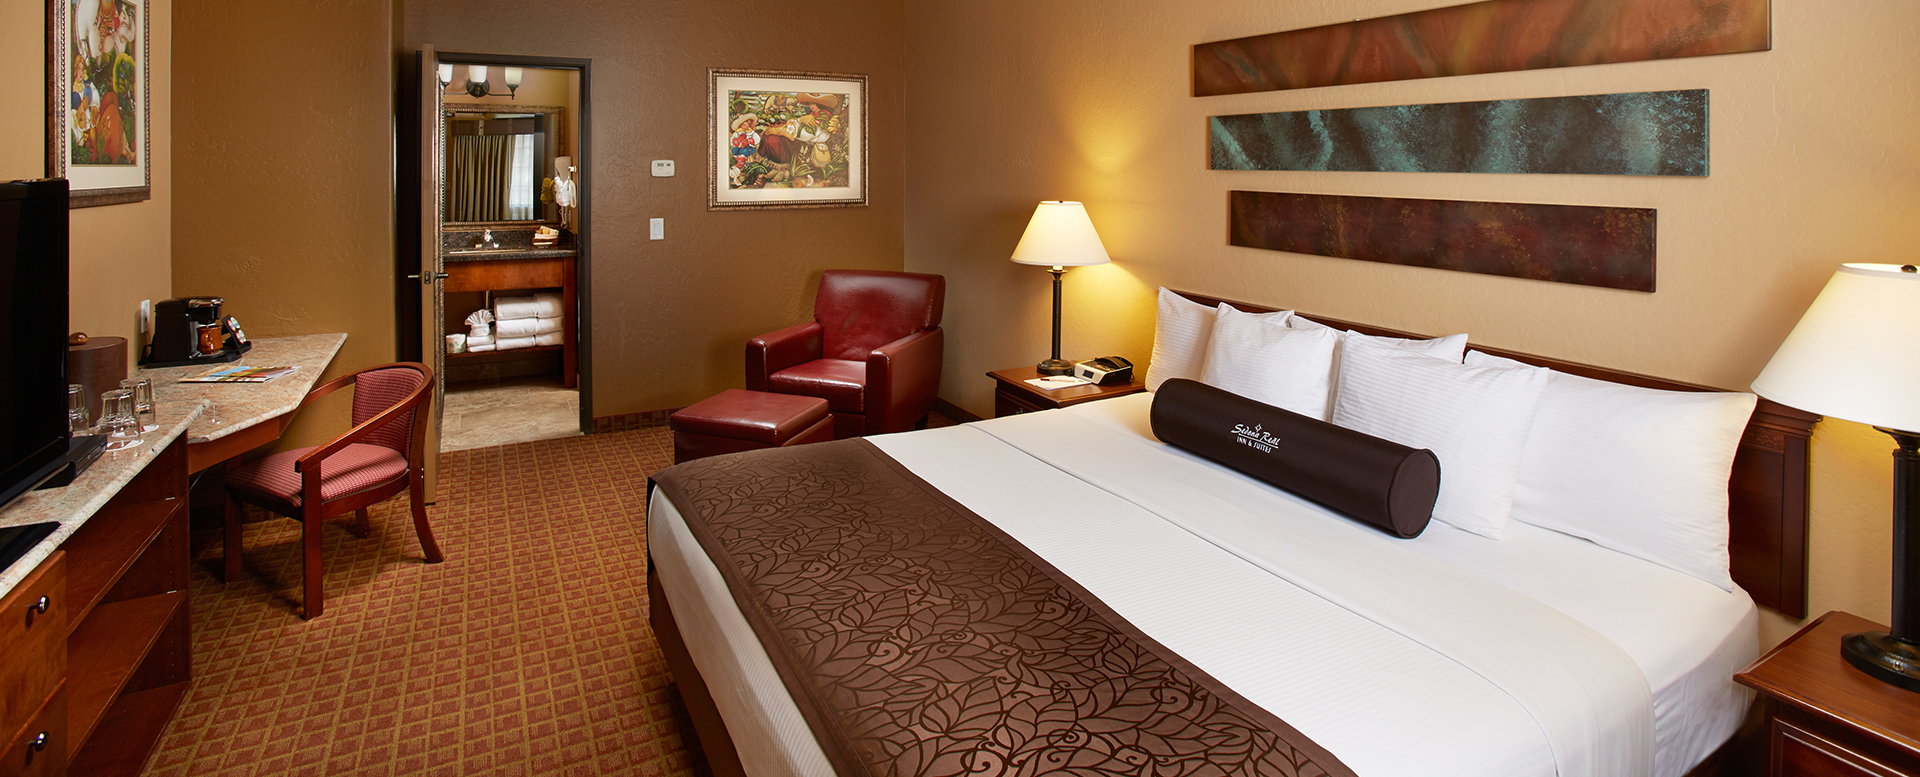 Sedona Real Inn & Suites - Regal King Room